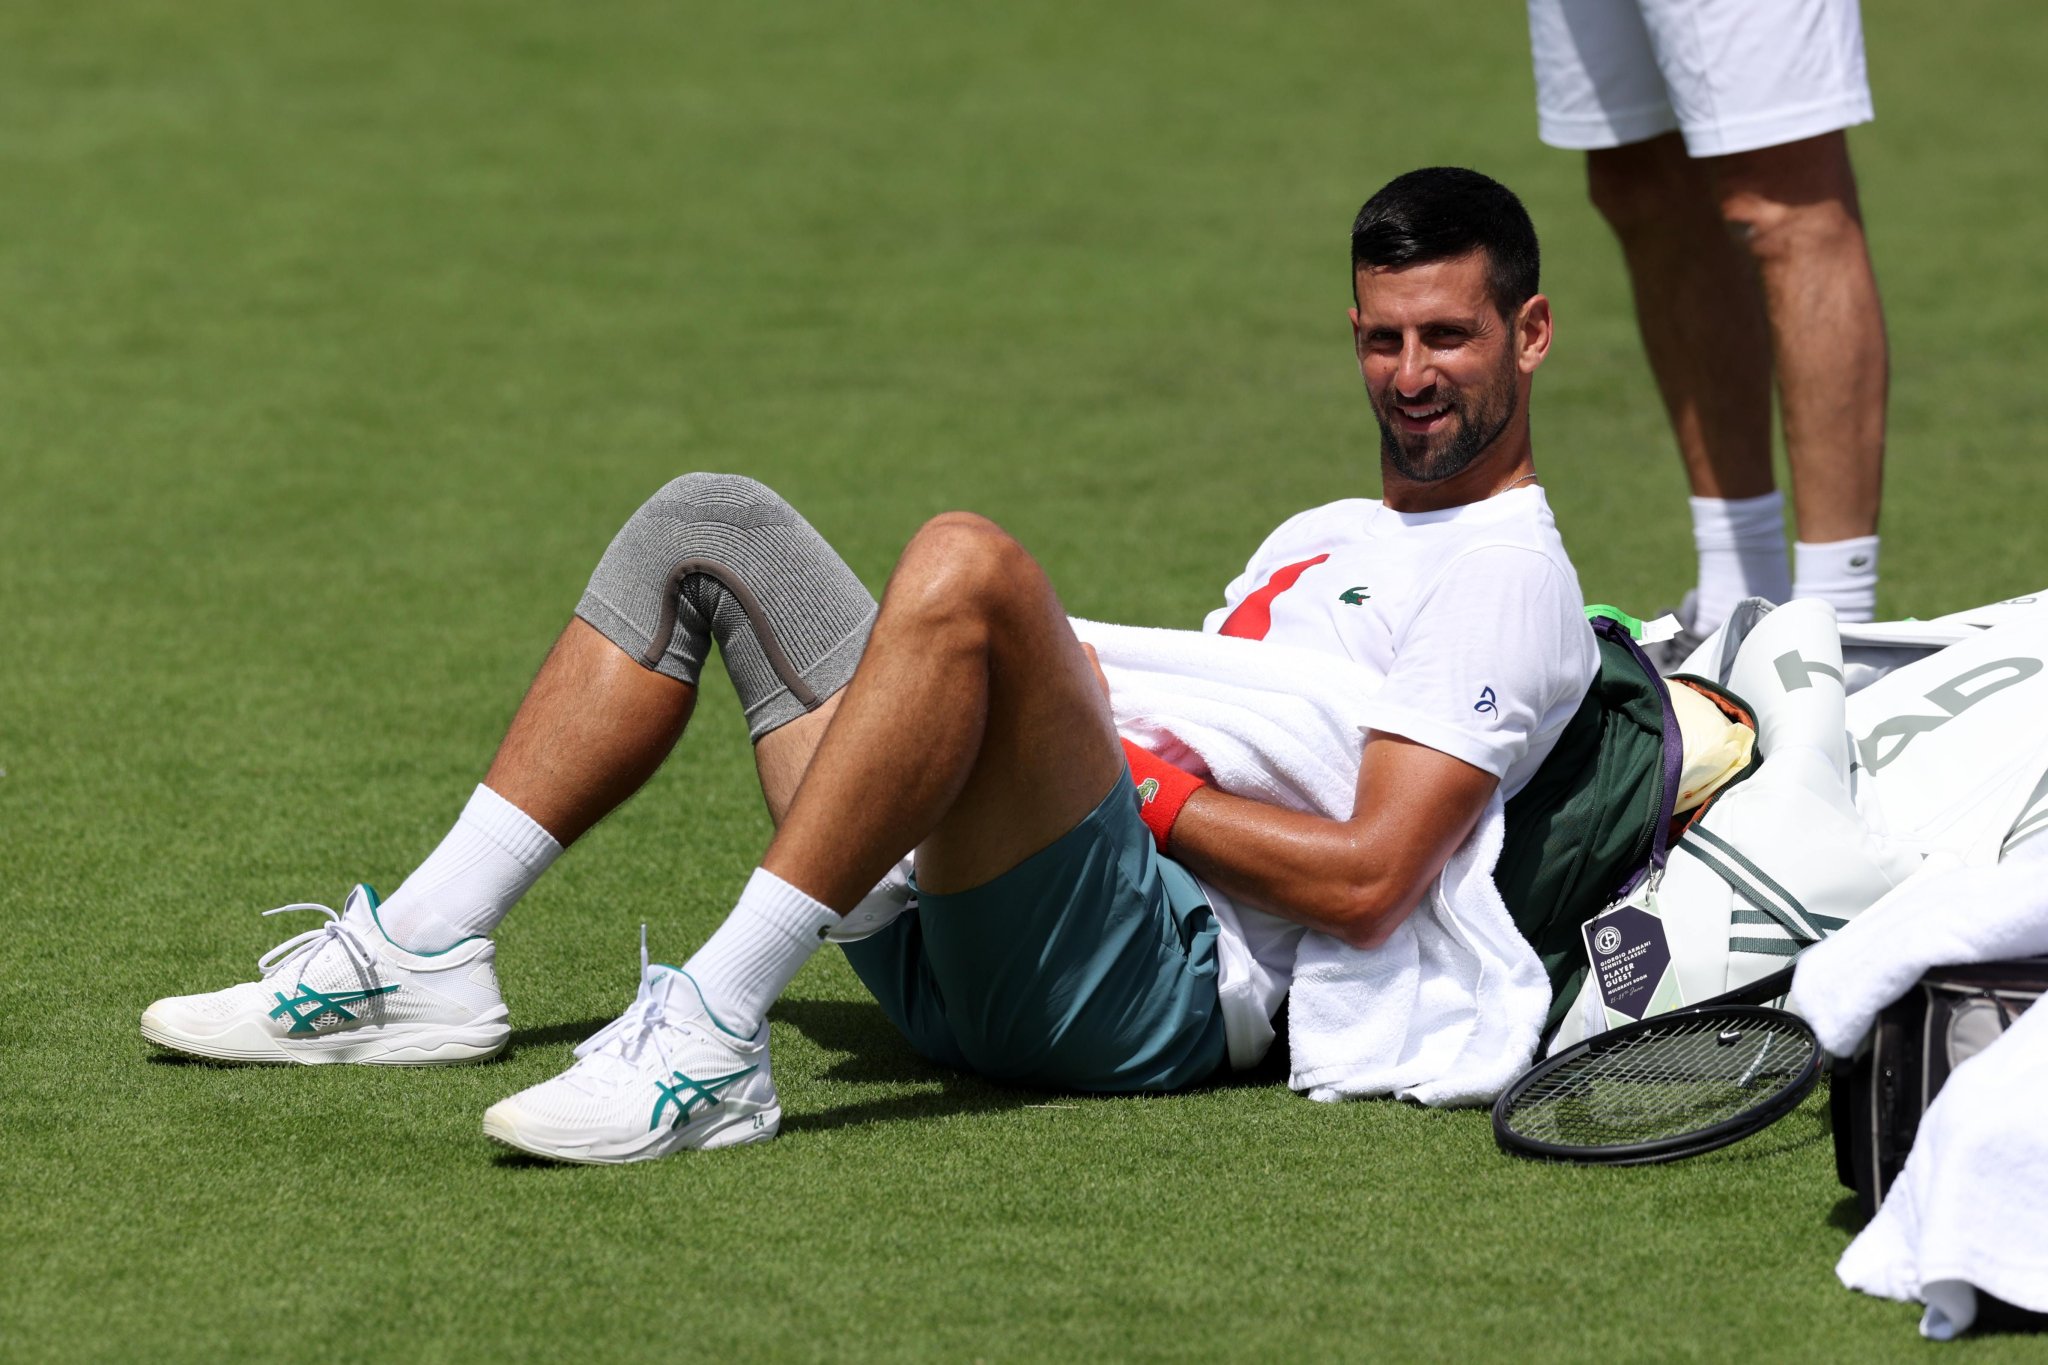 Novak Djokovic is testing his “no limits” philosophy again at Wimbledon